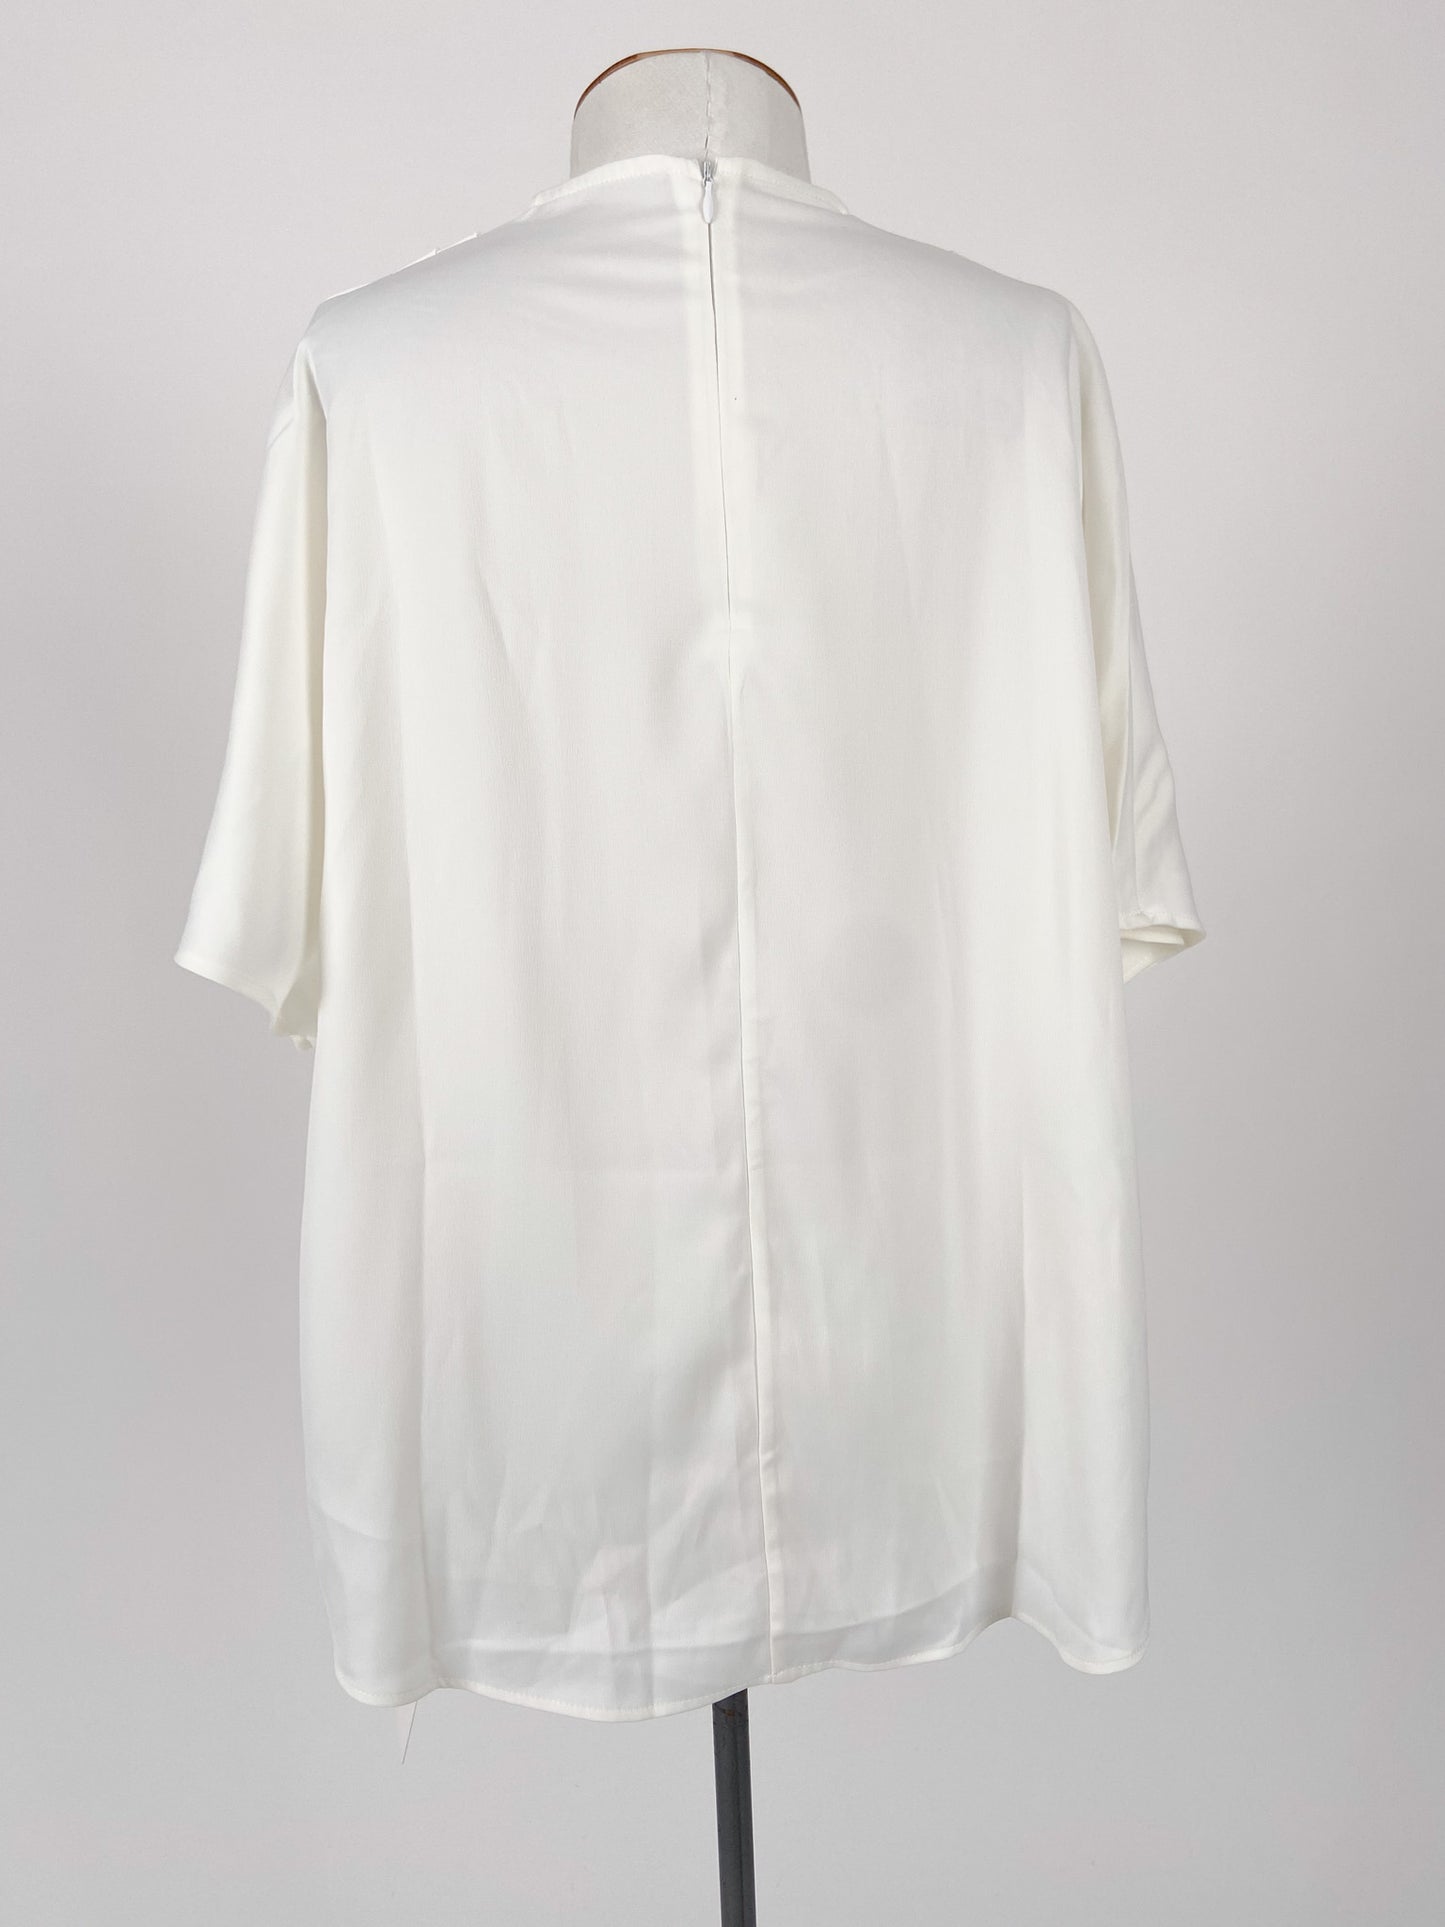 Shein | White Casual/Workwear Top | Size XS